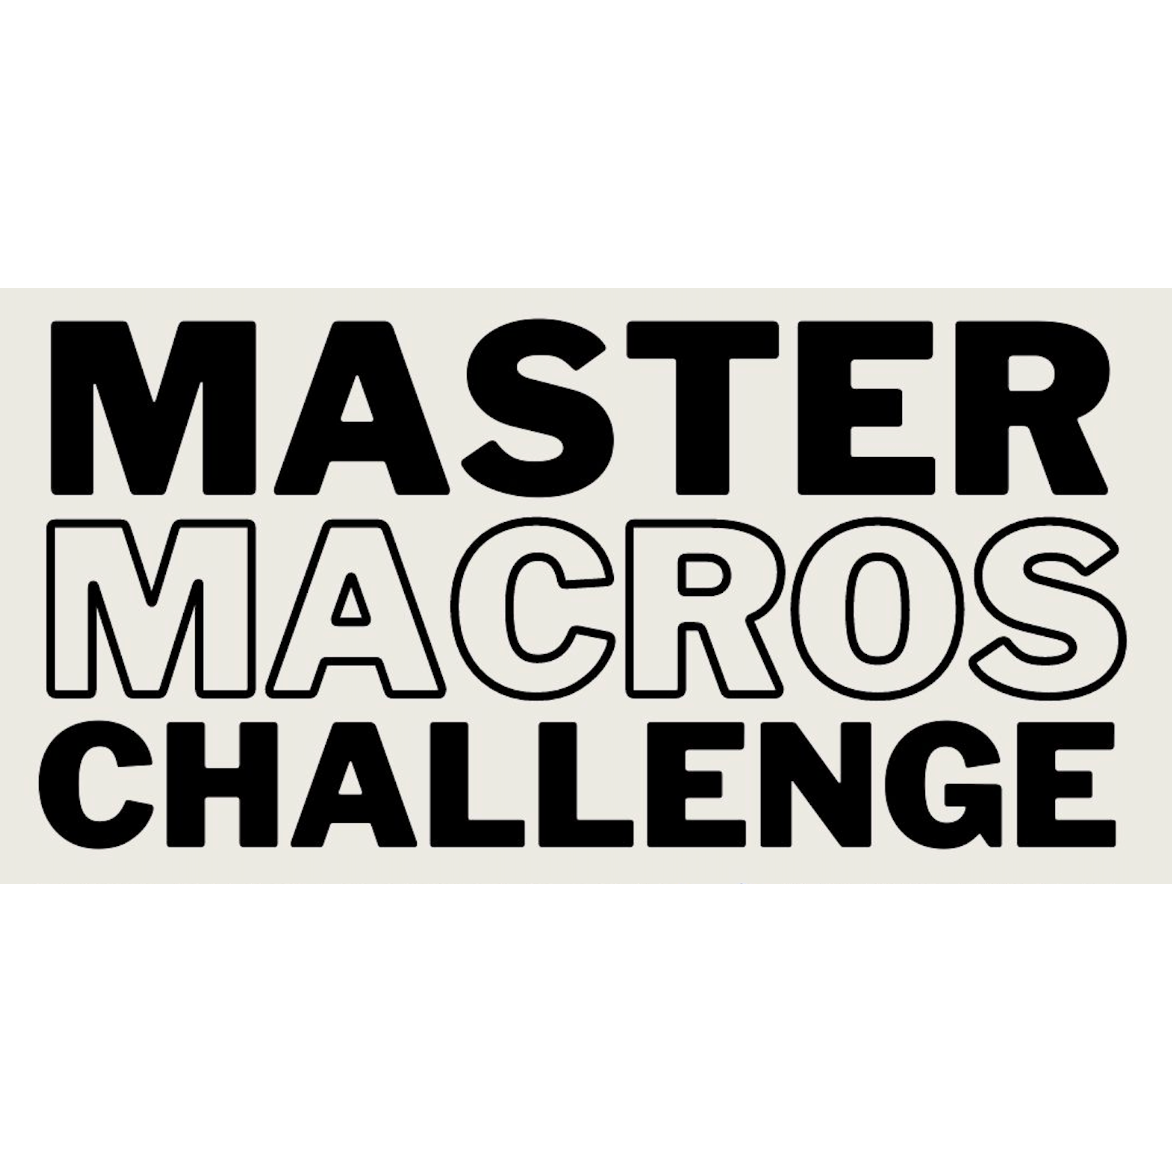 Master Macros Challenge